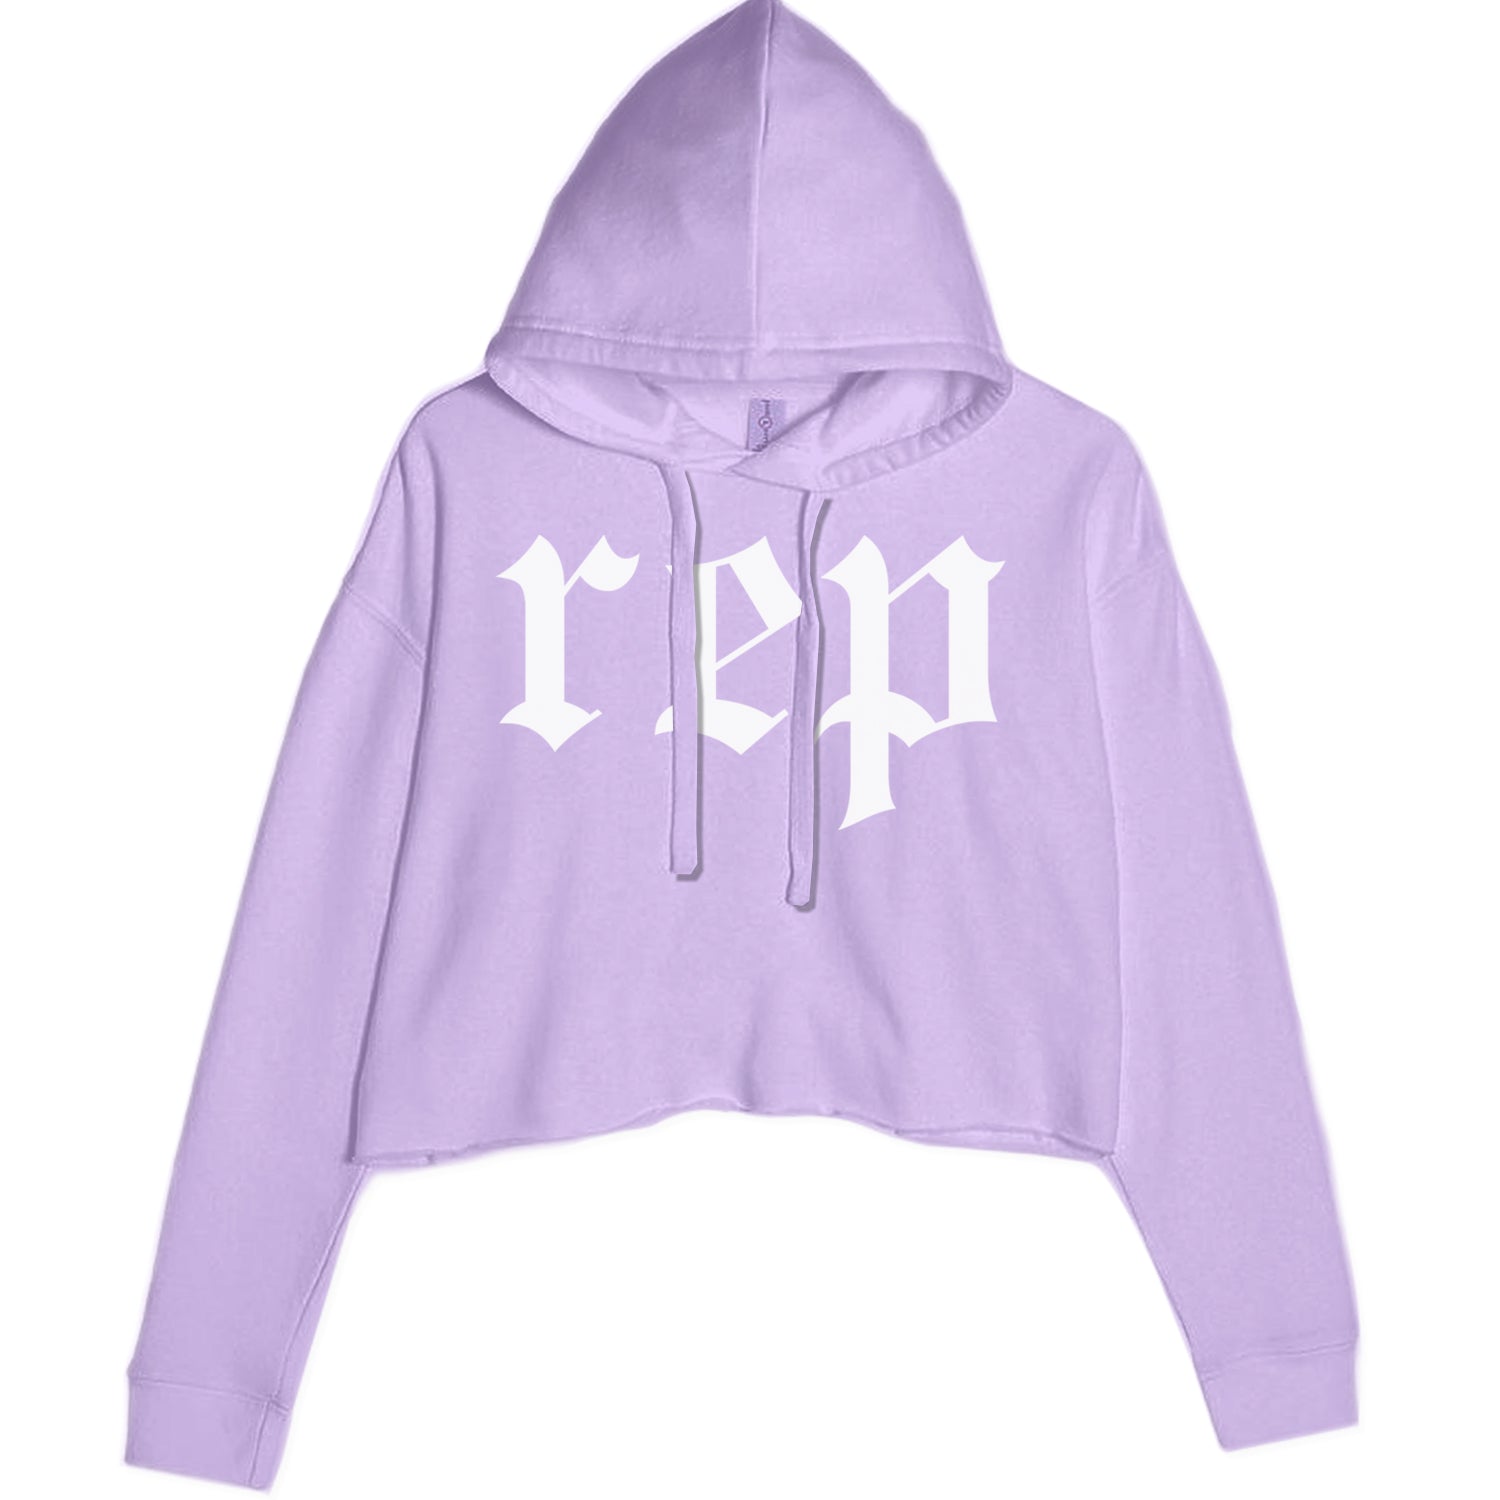 REP Reputation Eras Music Lover Gift Fan Favorite Cropped Hoodie Sweatshirt Lavender